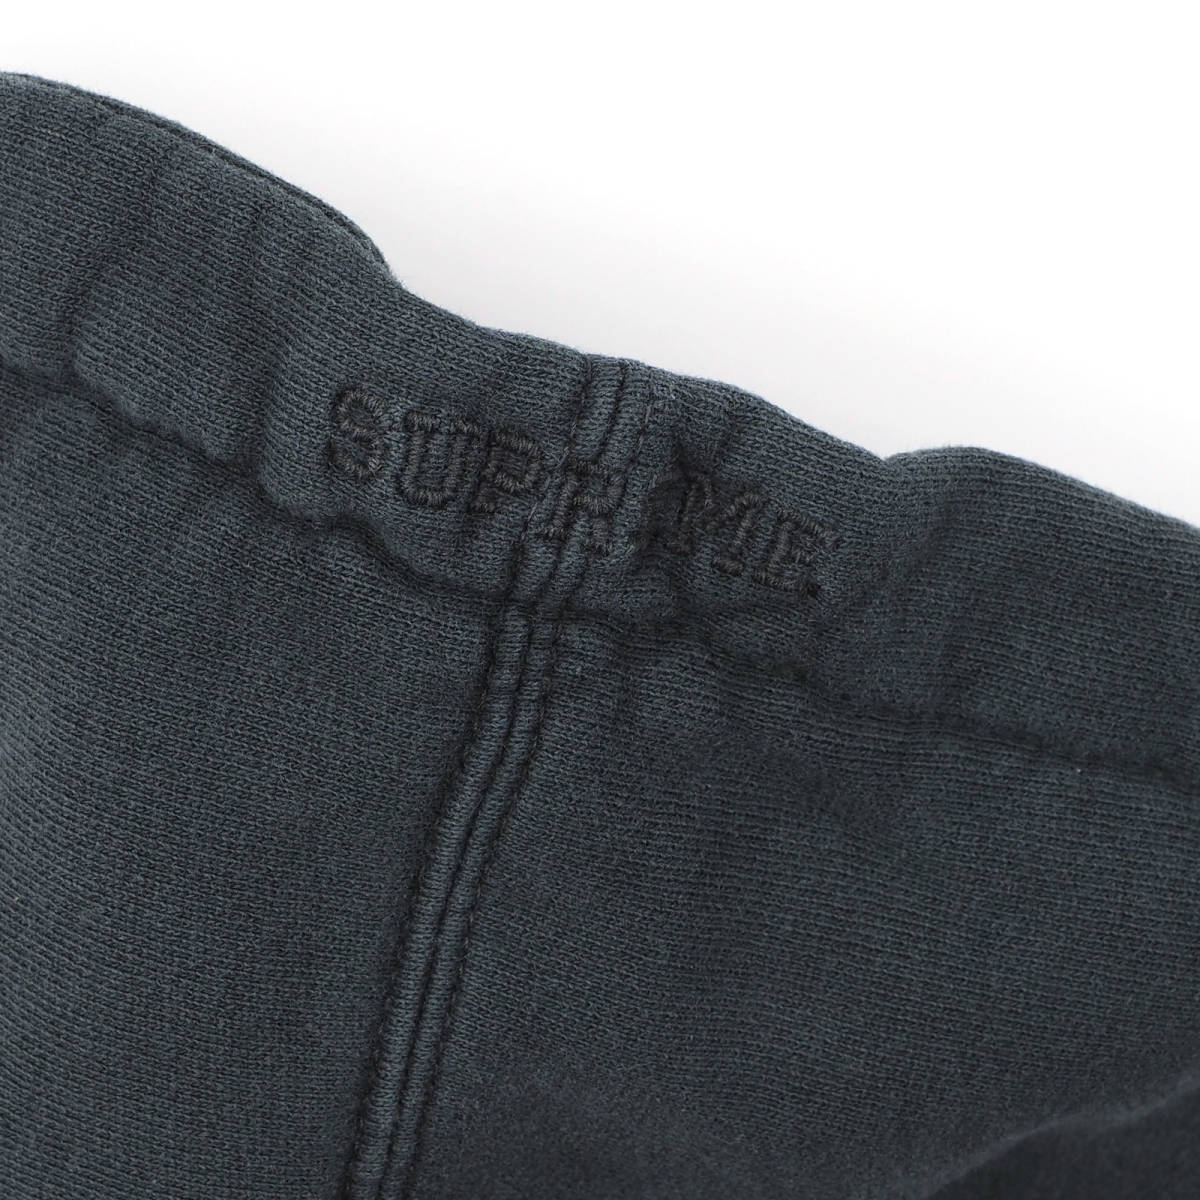 Supreme - Overdyed S Logo Hooded Sweatshirt 黒XL シュプリーム - オーバーダイド エス ロゴ フーデッド スウェットシャツ 2023SS_画像5